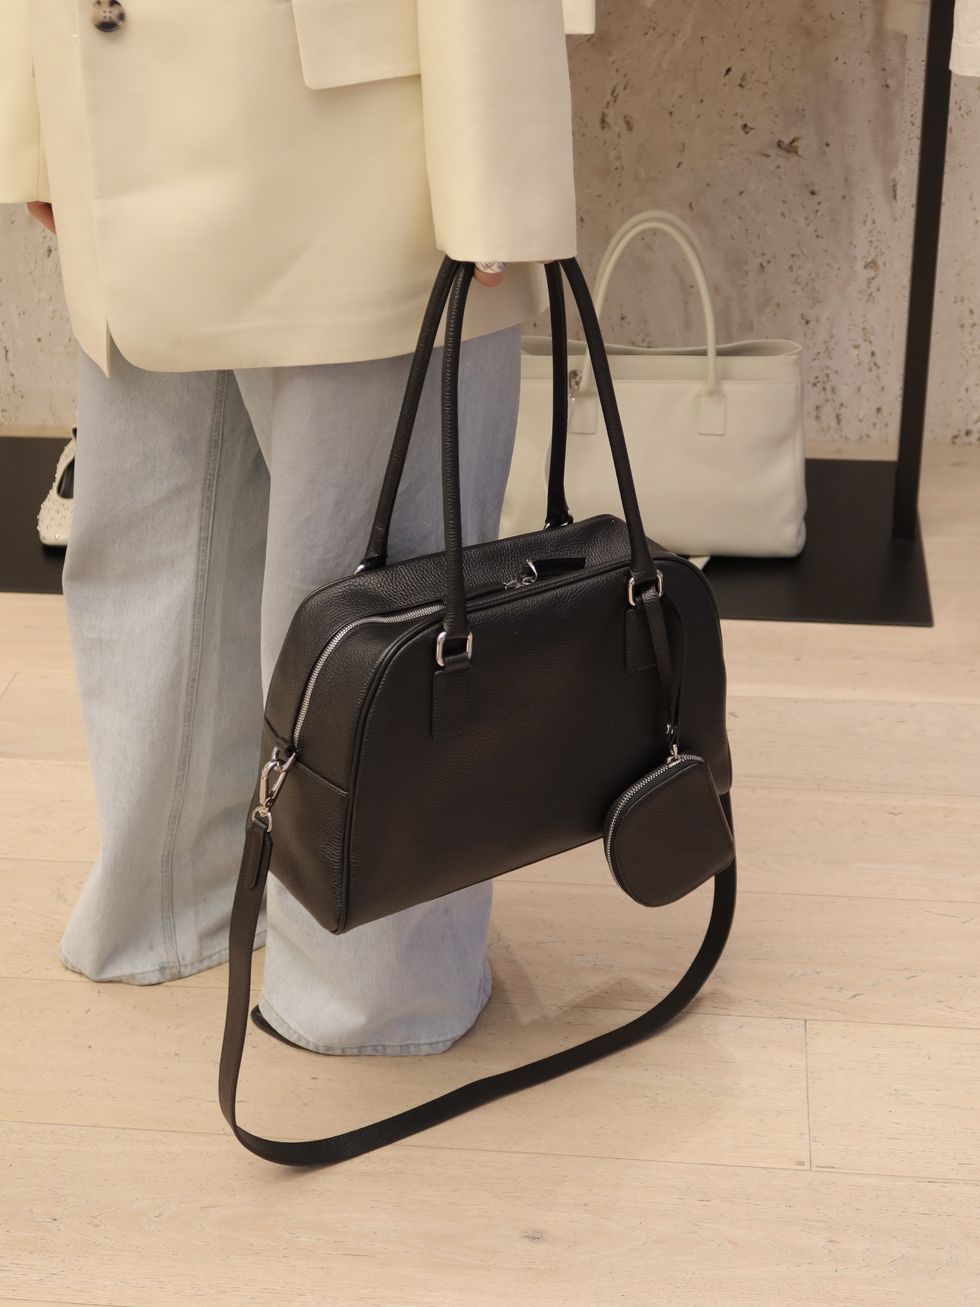 a black handbag on a white surface